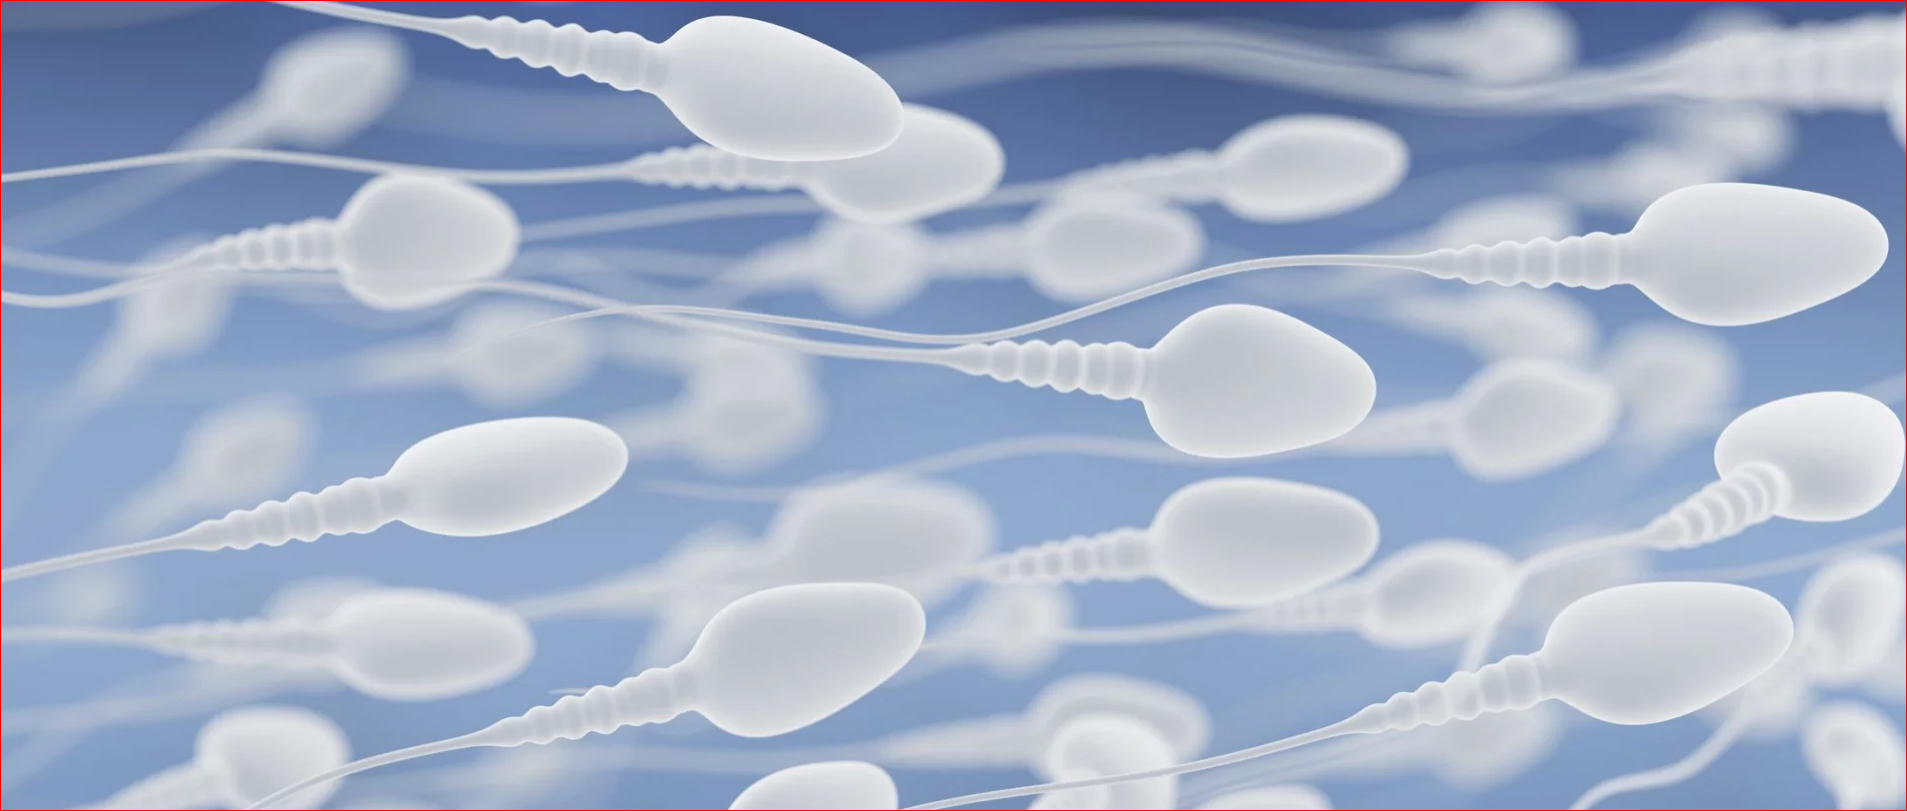 Jessica R. reccomend Recycled sperm growth hormone